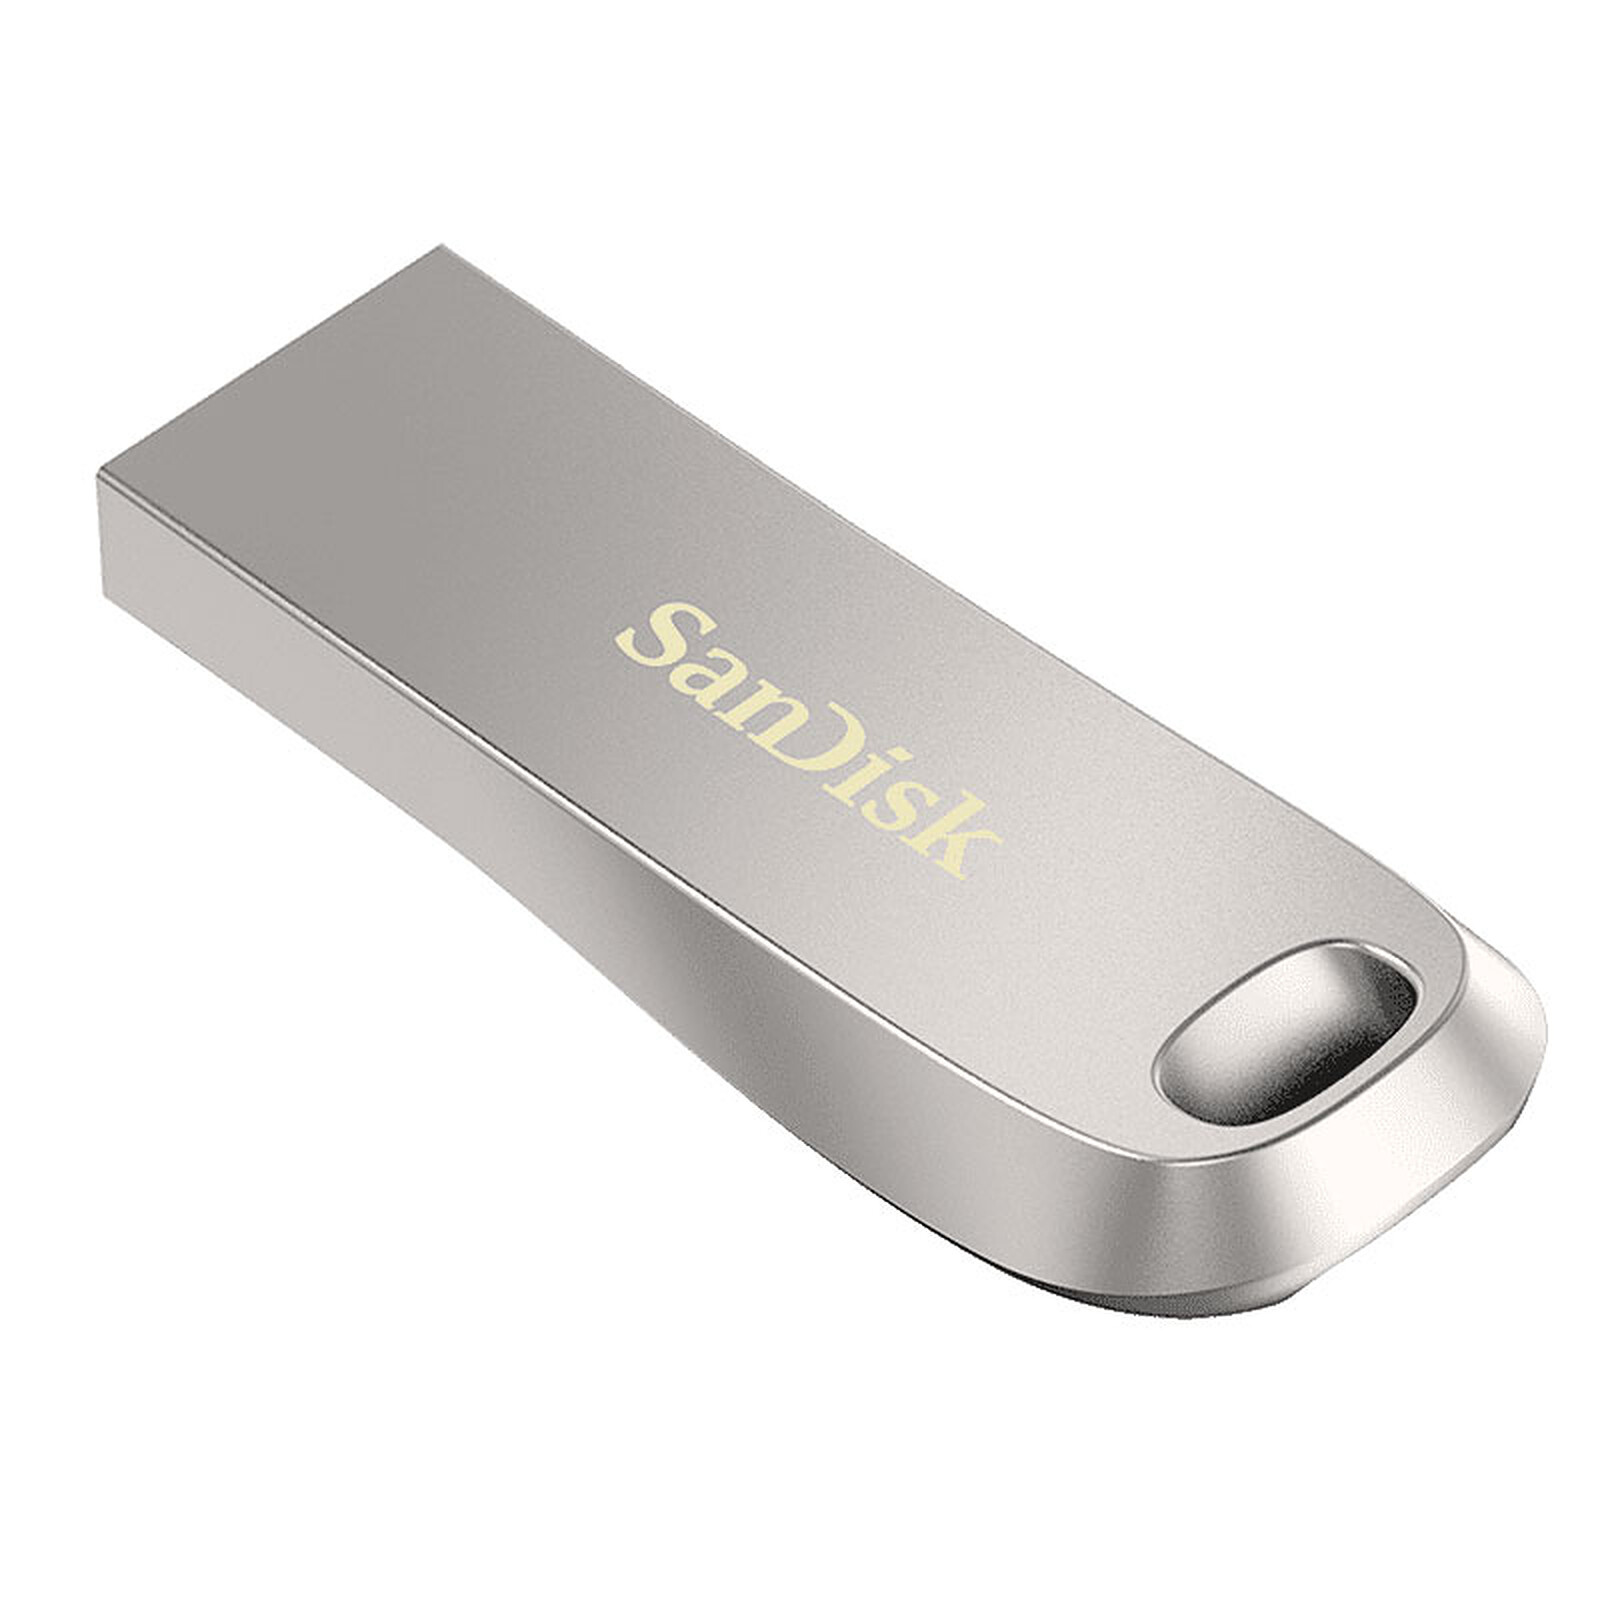 SanDisk Ultra Luxe 64 GB - USB flash drive - LDLC 3-year warranty